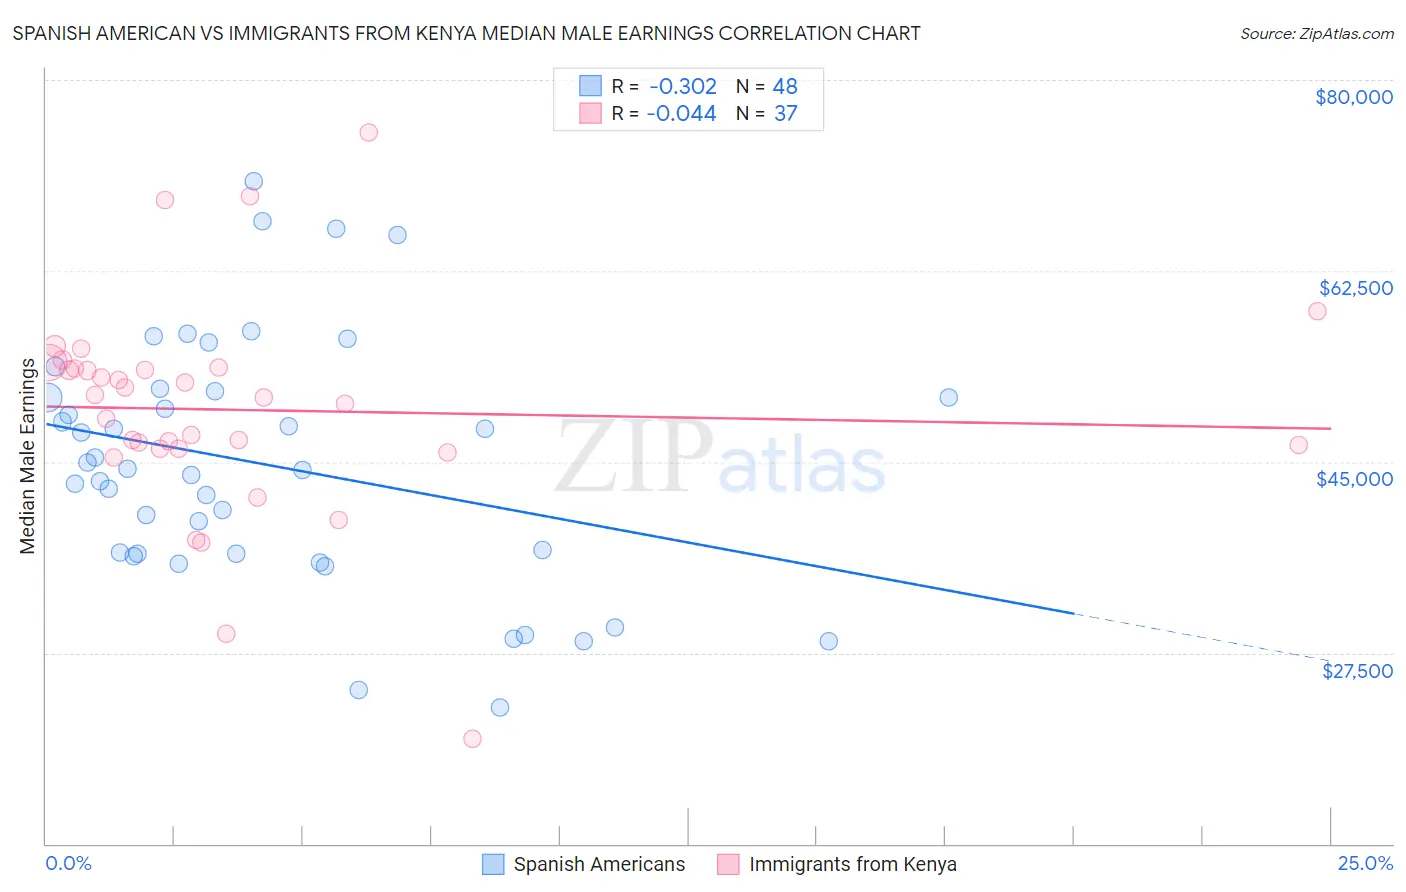 Spanish American vs Immigrants from Kenya Median Male Earnings